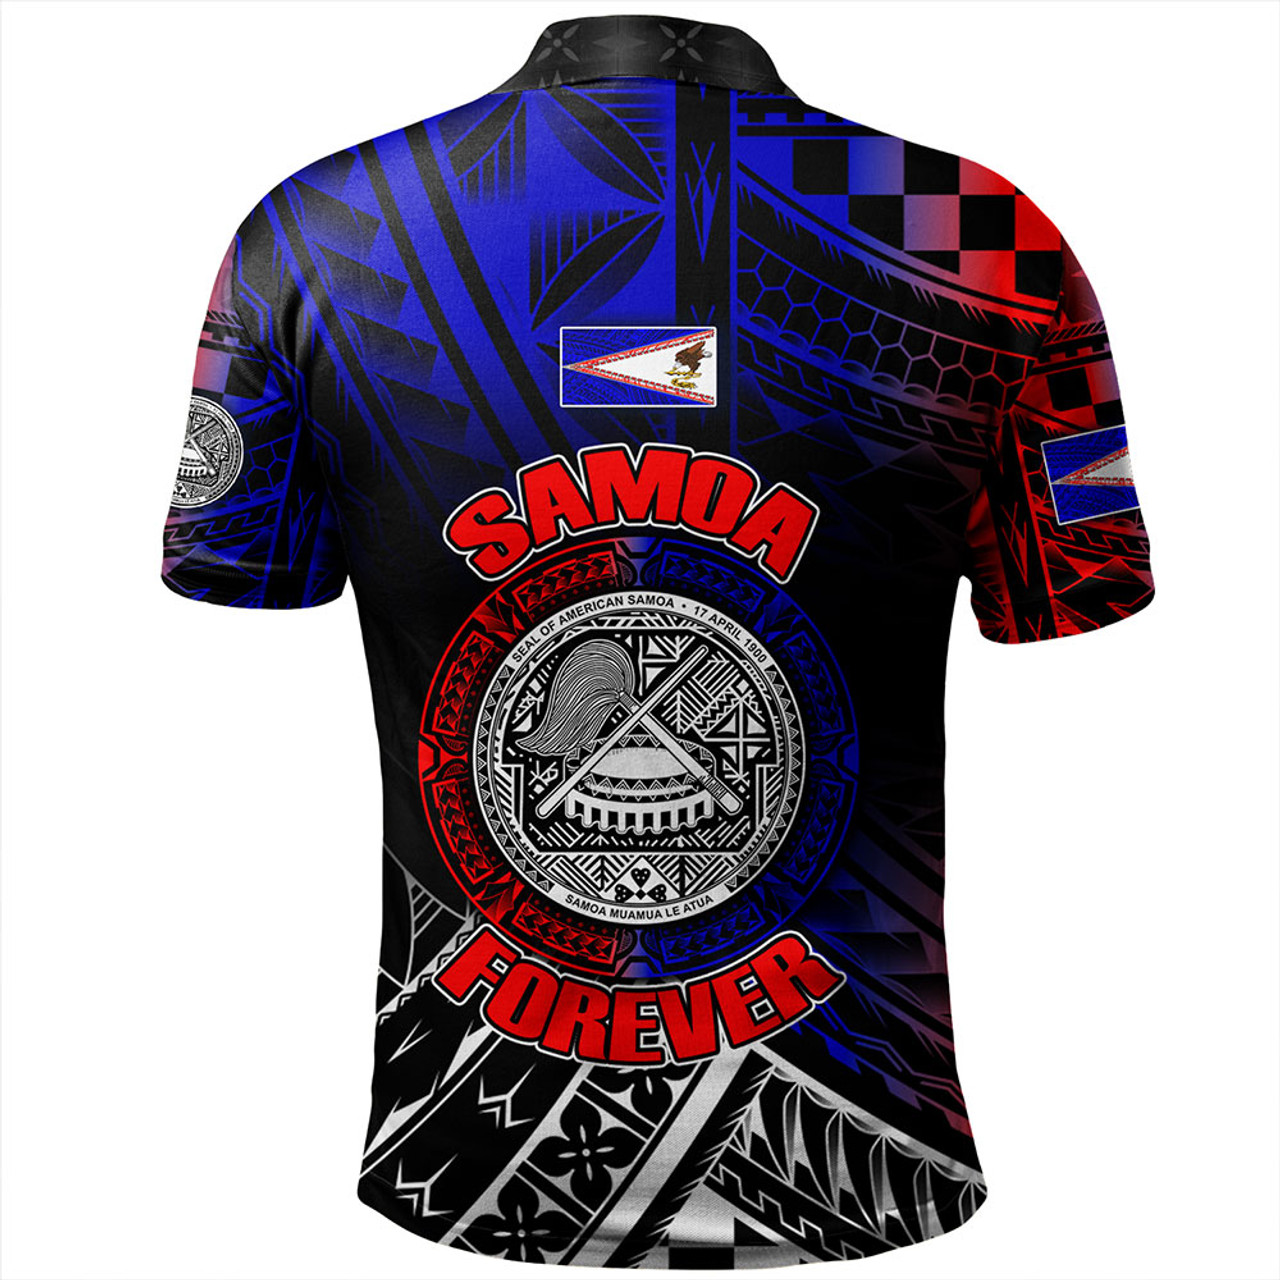 American Samoa Polo Shirt Always In Gods Arms